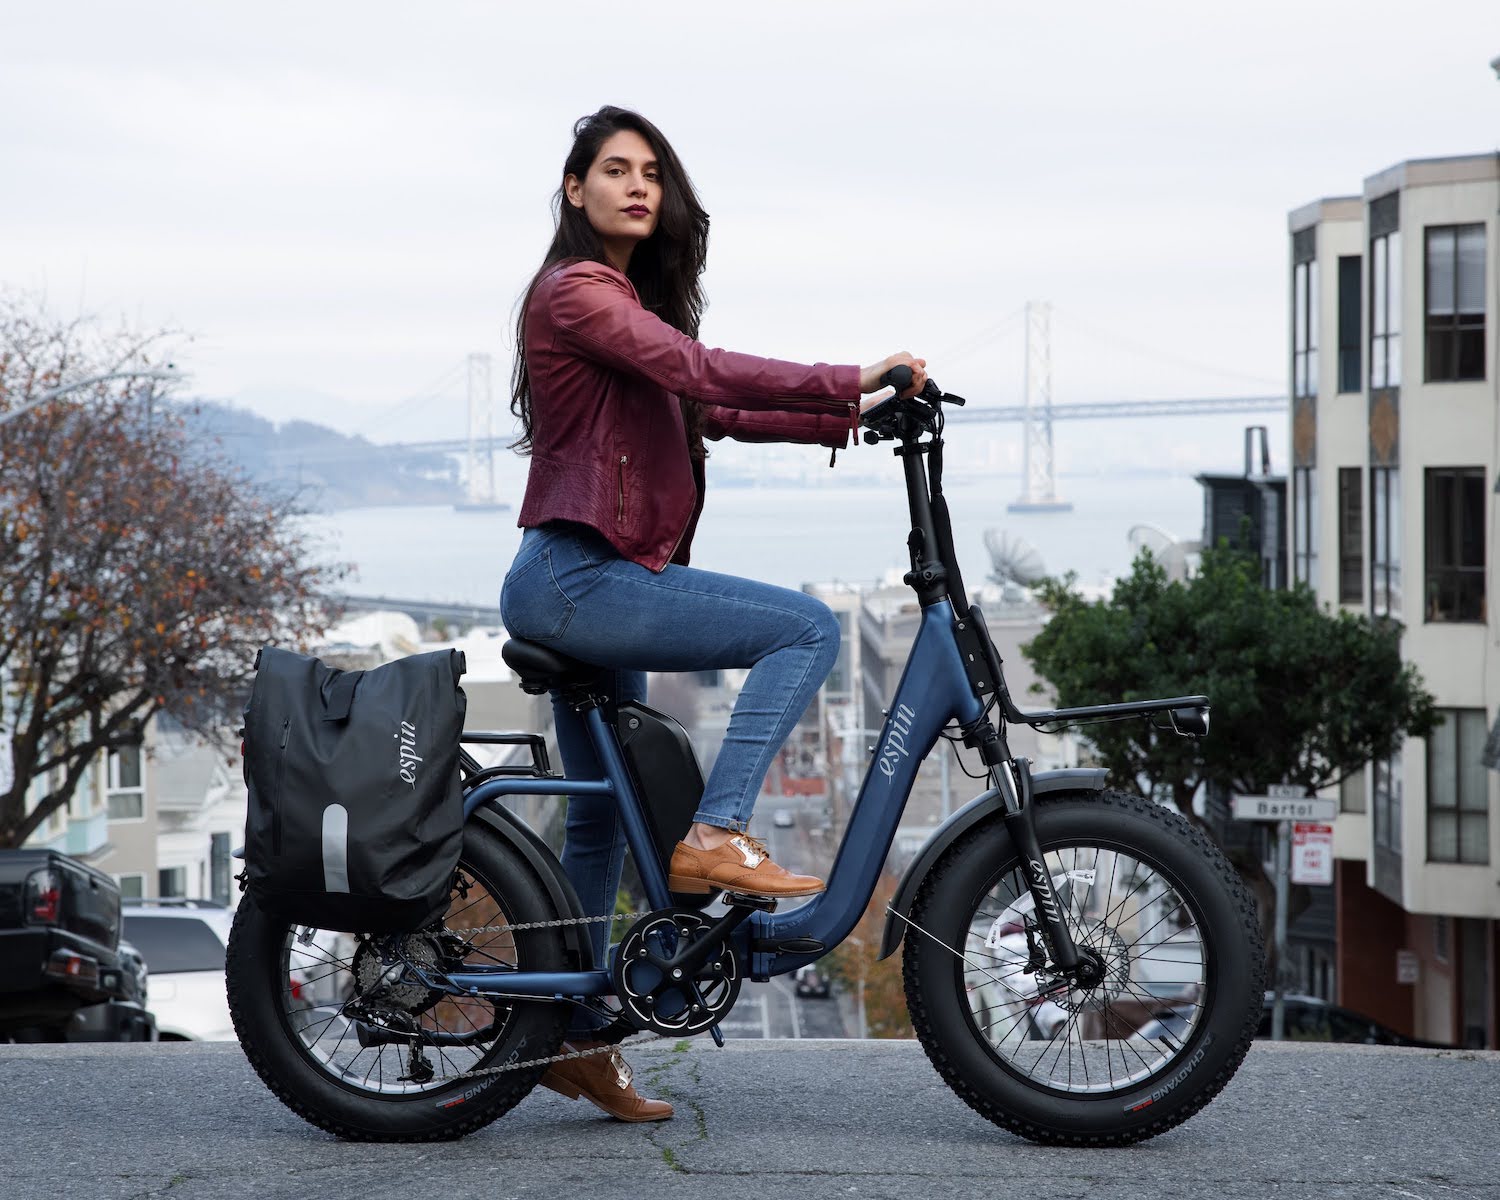 Womens Electric Bikes, Best Commuter Bikes For Women